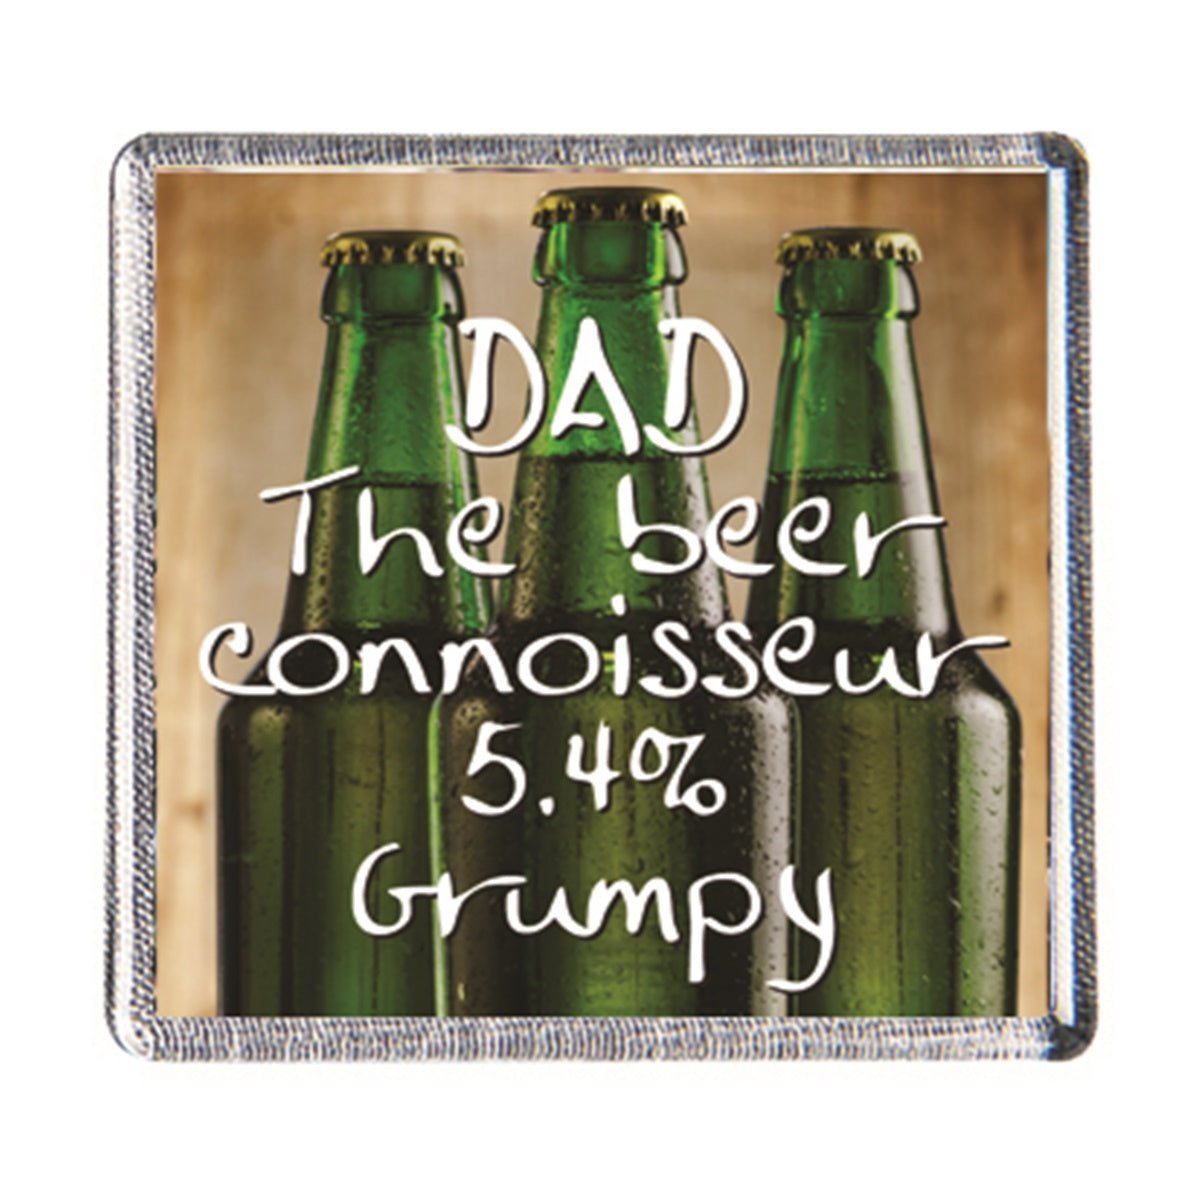 History & Heraldry Sentiment Fridge Magnet - MAG-004 - Dad The beer connoisseur 5.4% Grumpy